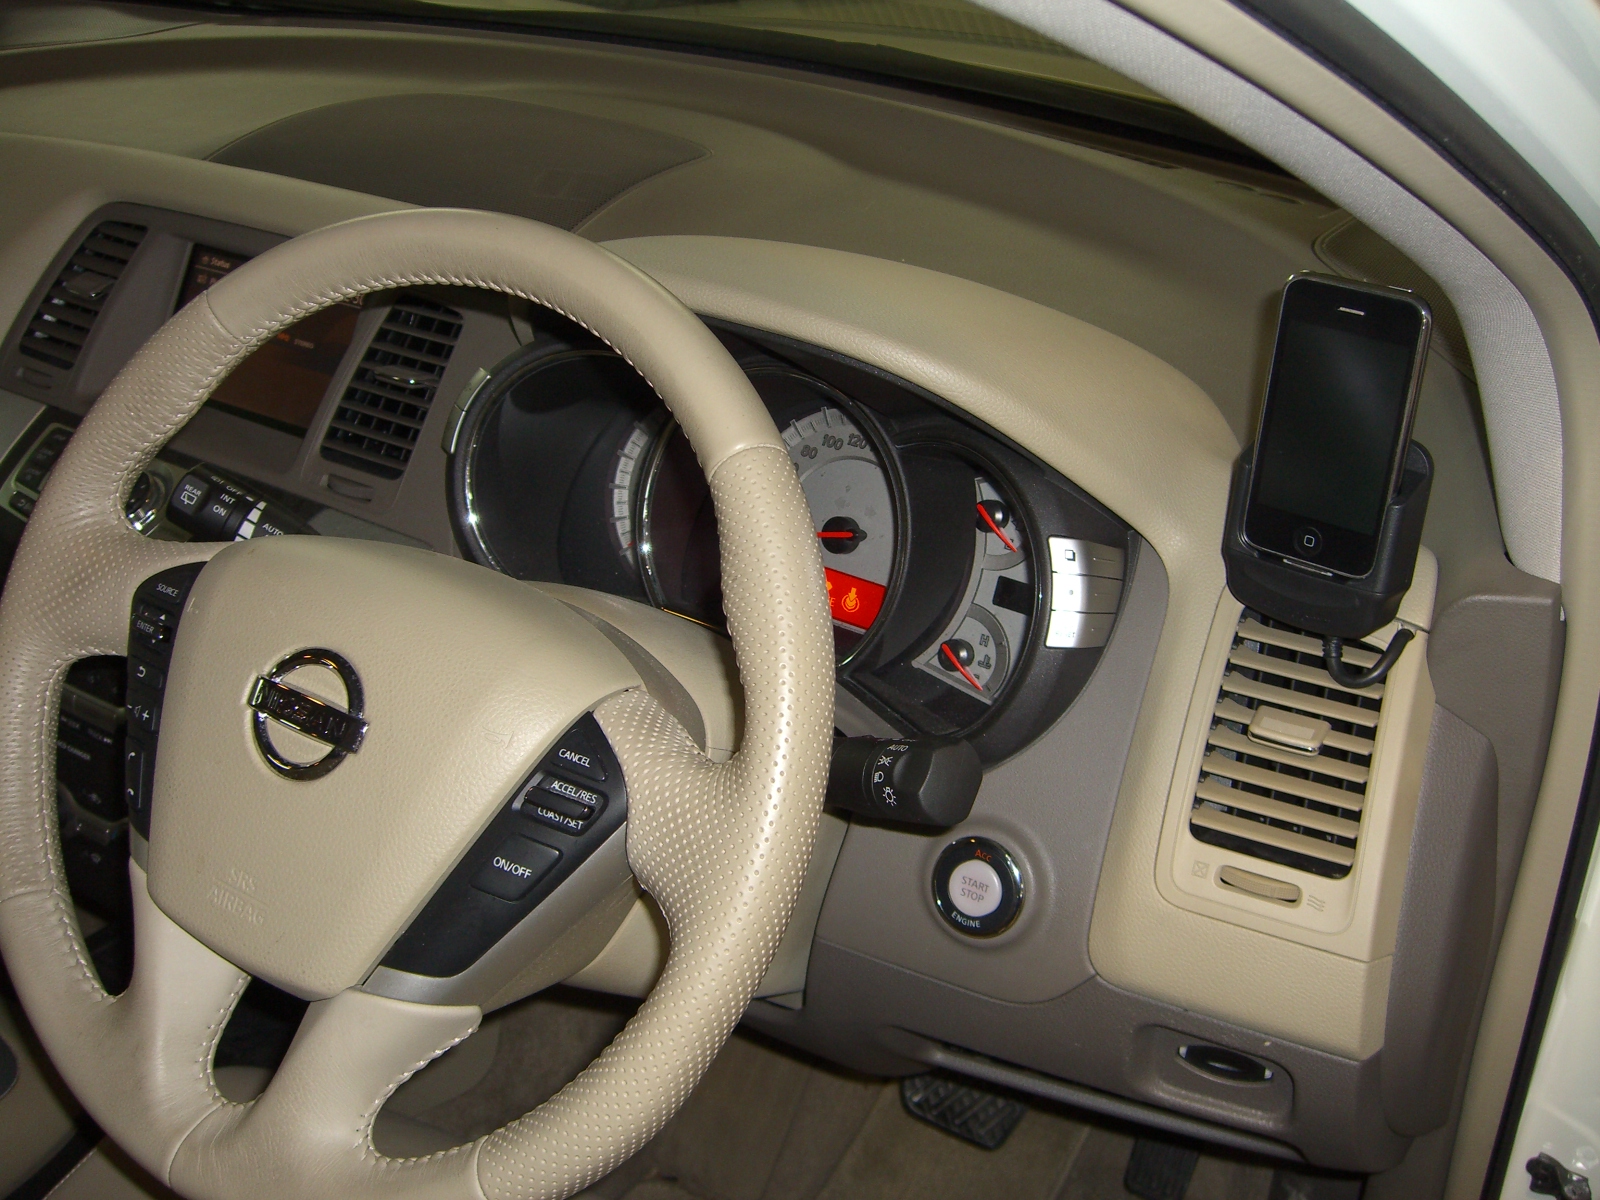 Nissan Murano 2009 iphone cradle installation